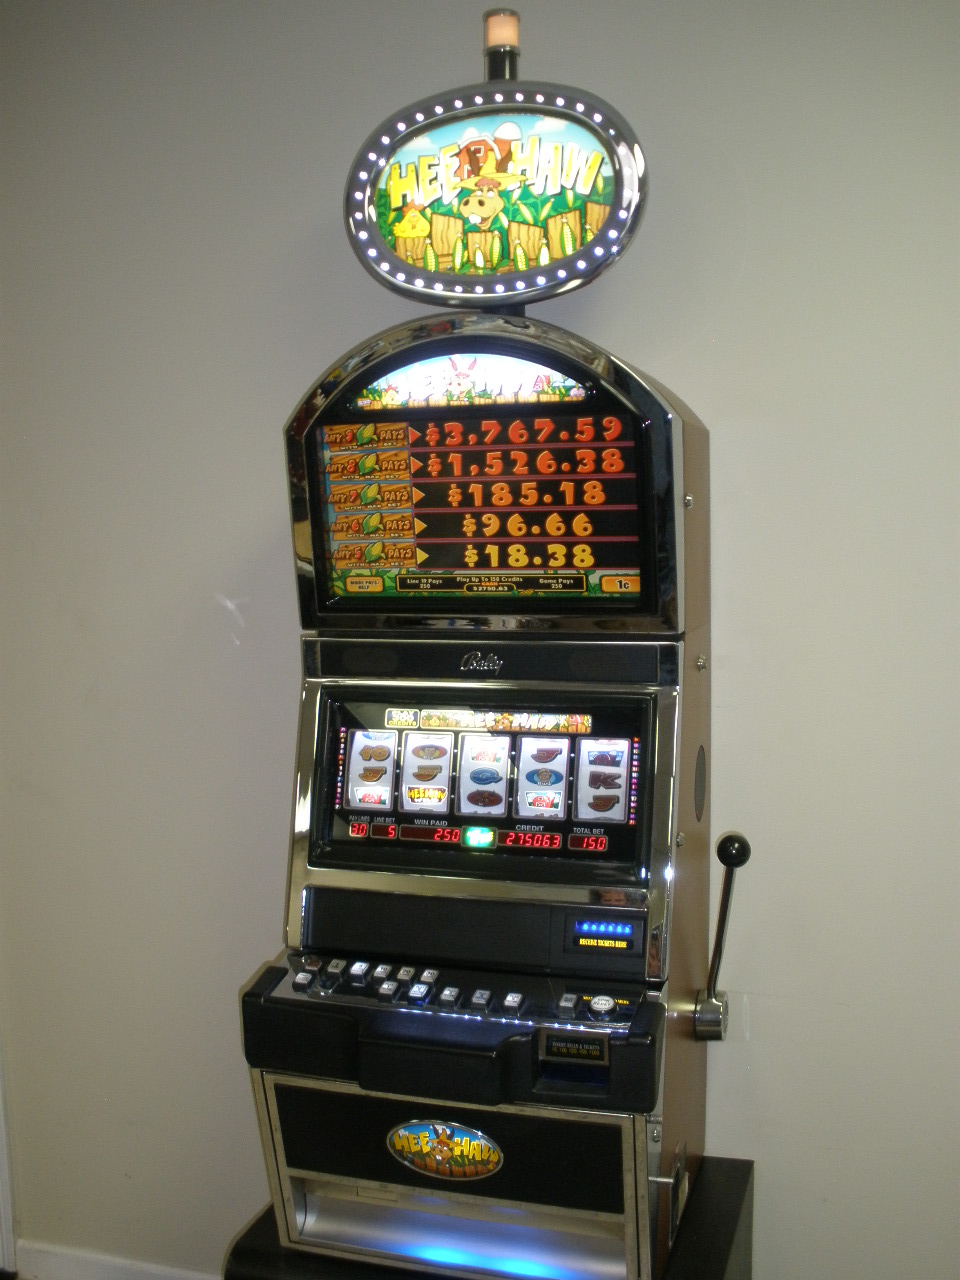 hee haw slot machine jackpot images